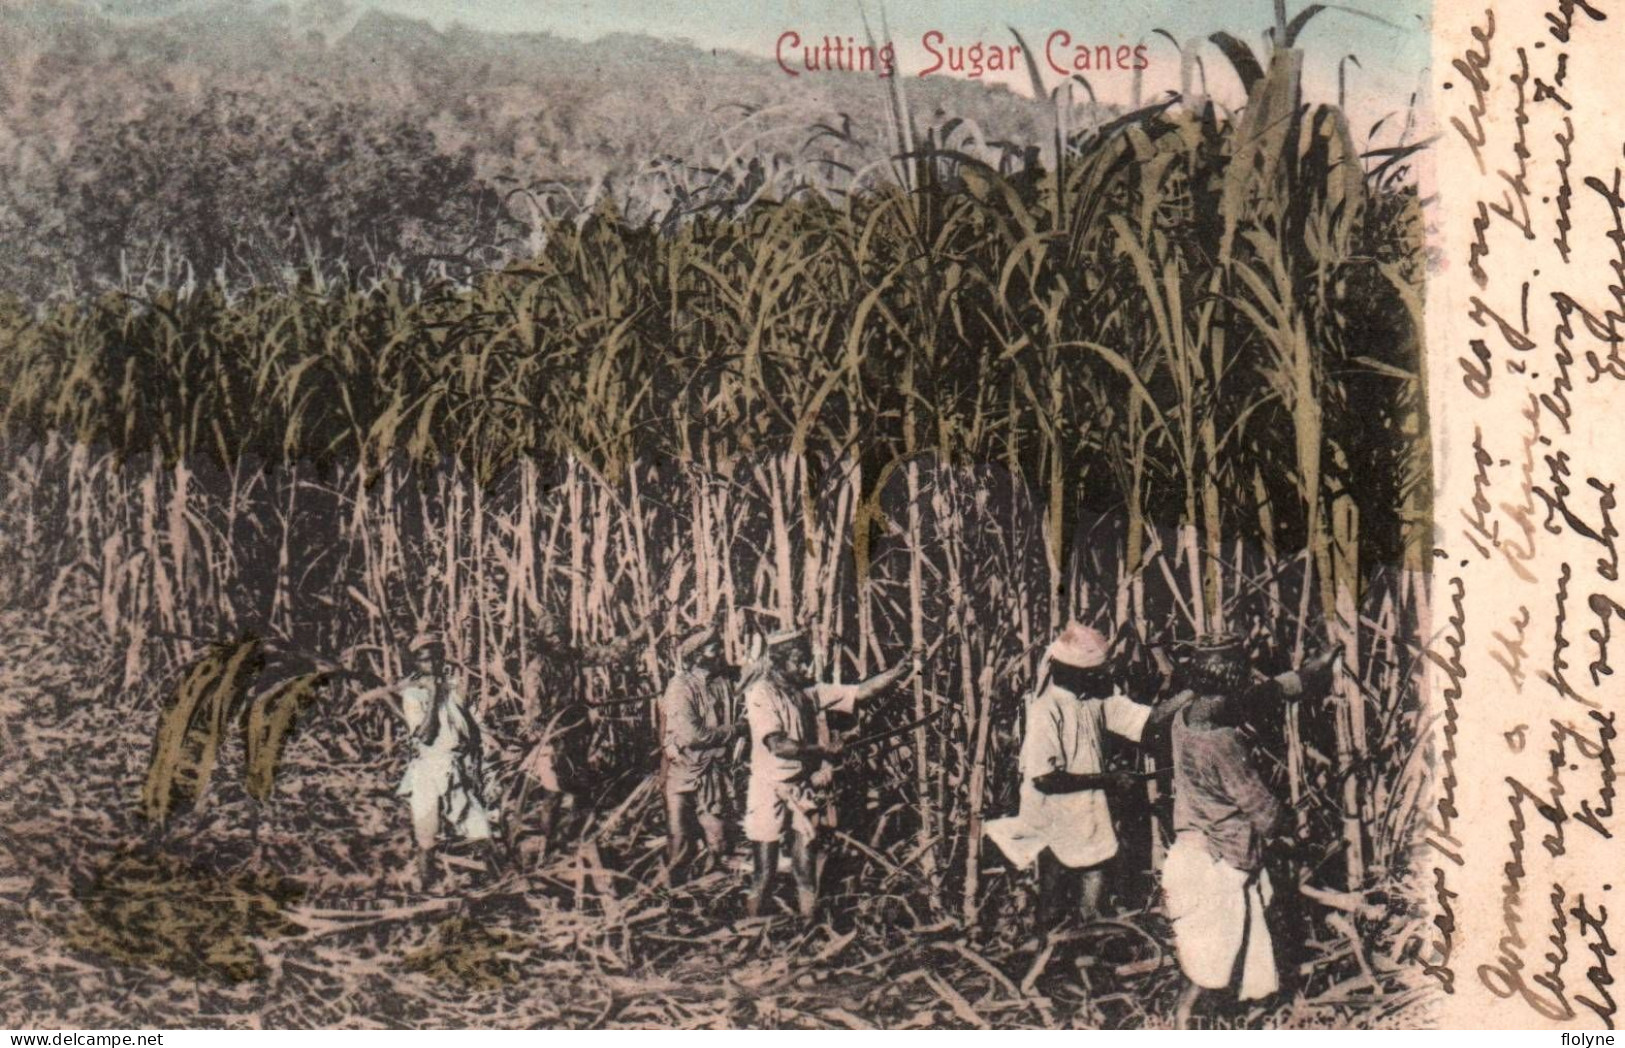 Durban ? - Cutting Sugar Canes - Cannes à Sucre - Afrique Du Sud South Africa Transvaal - Zuid-Afrika